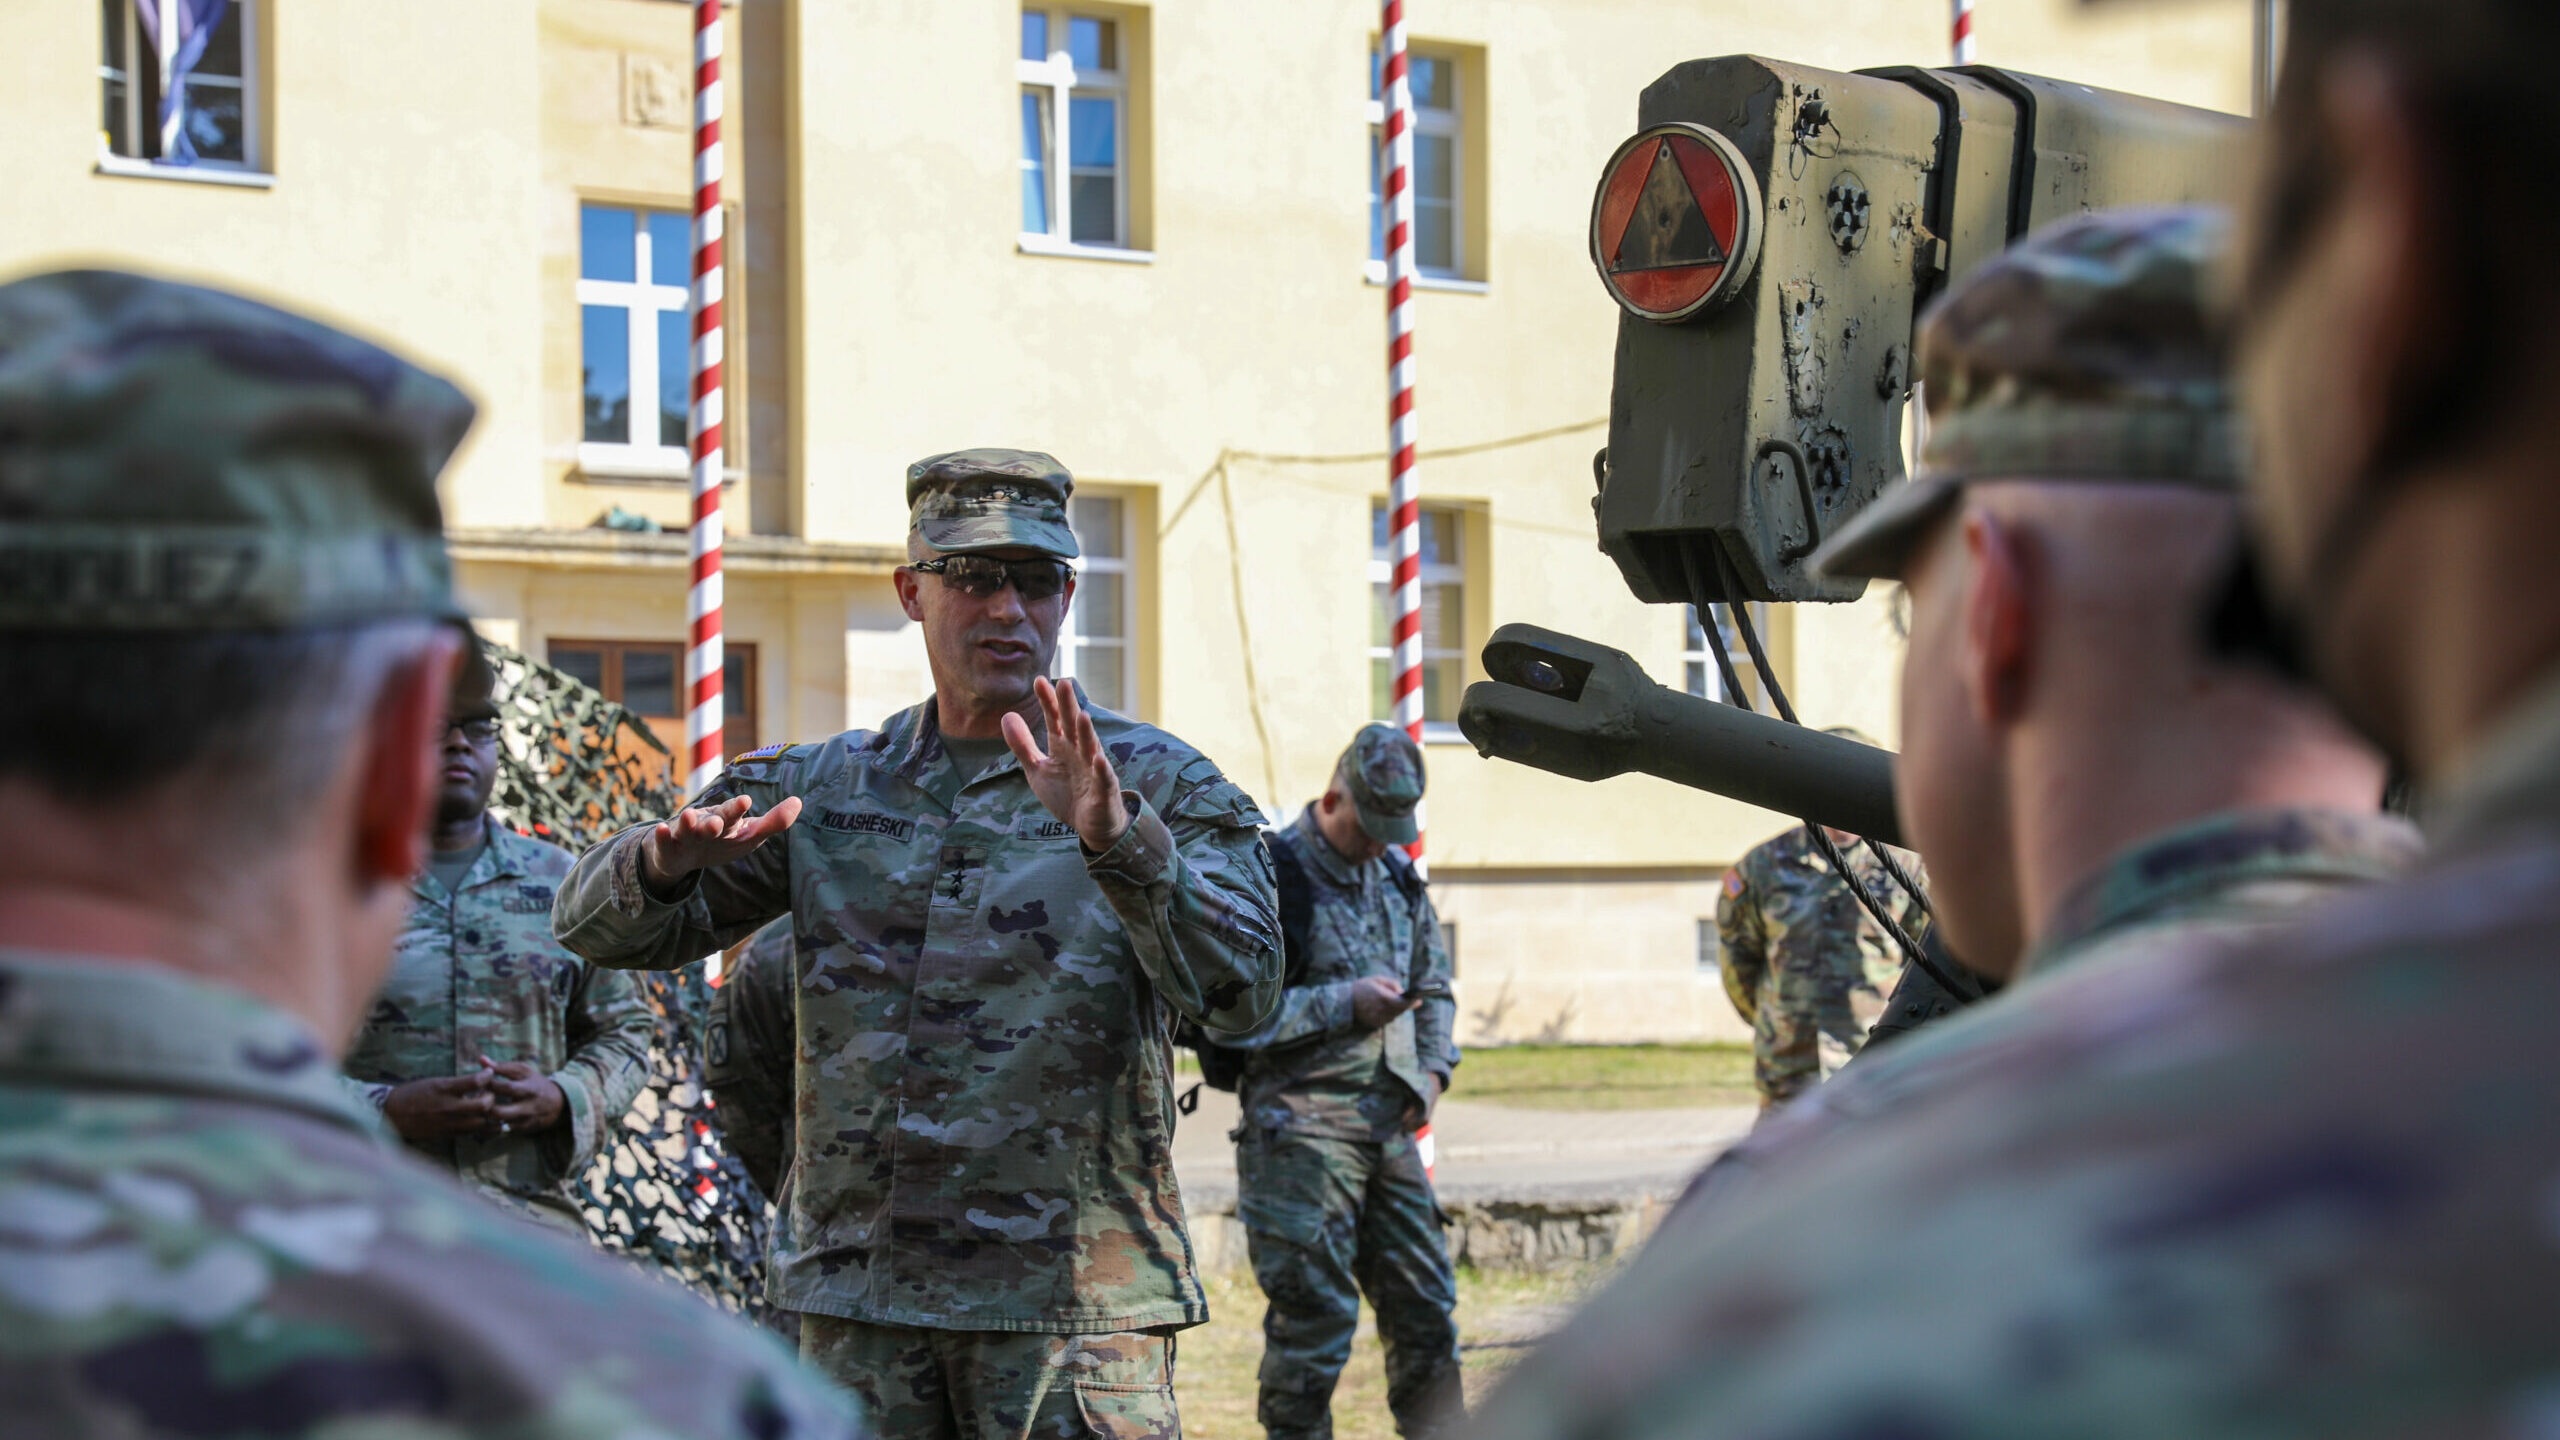 Lt. General Kolasheski visits soldiers in Zagan, Poland